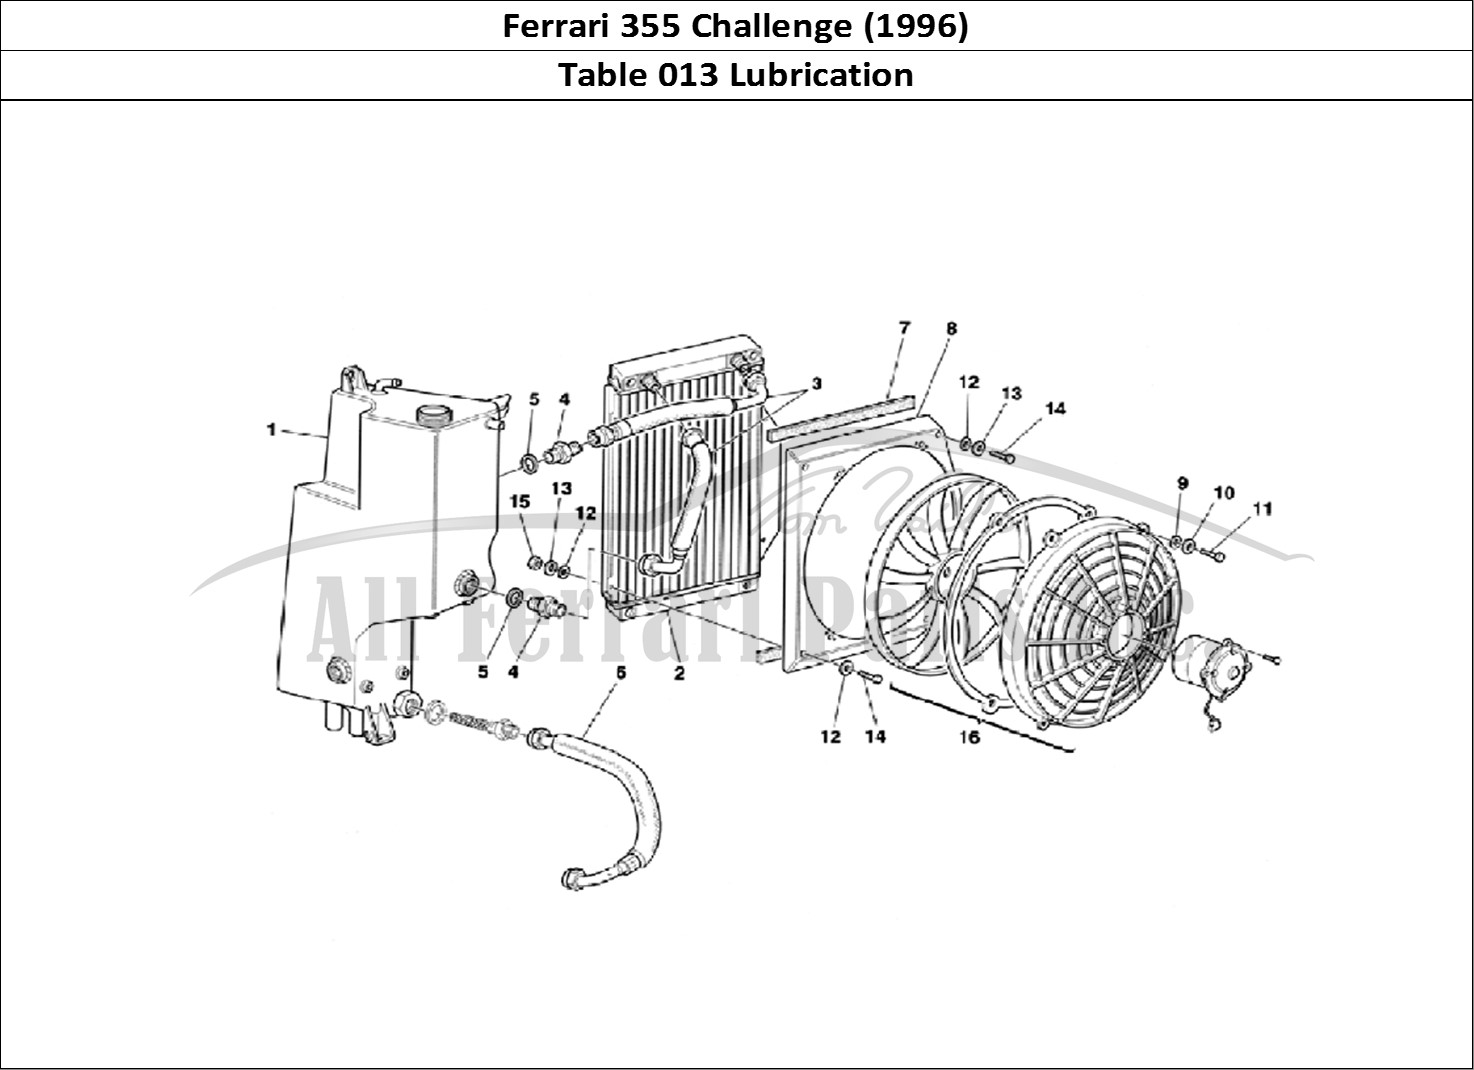 Ferrari Parts Ferrari 355 Challenge (1996) Page 013 Lubrication